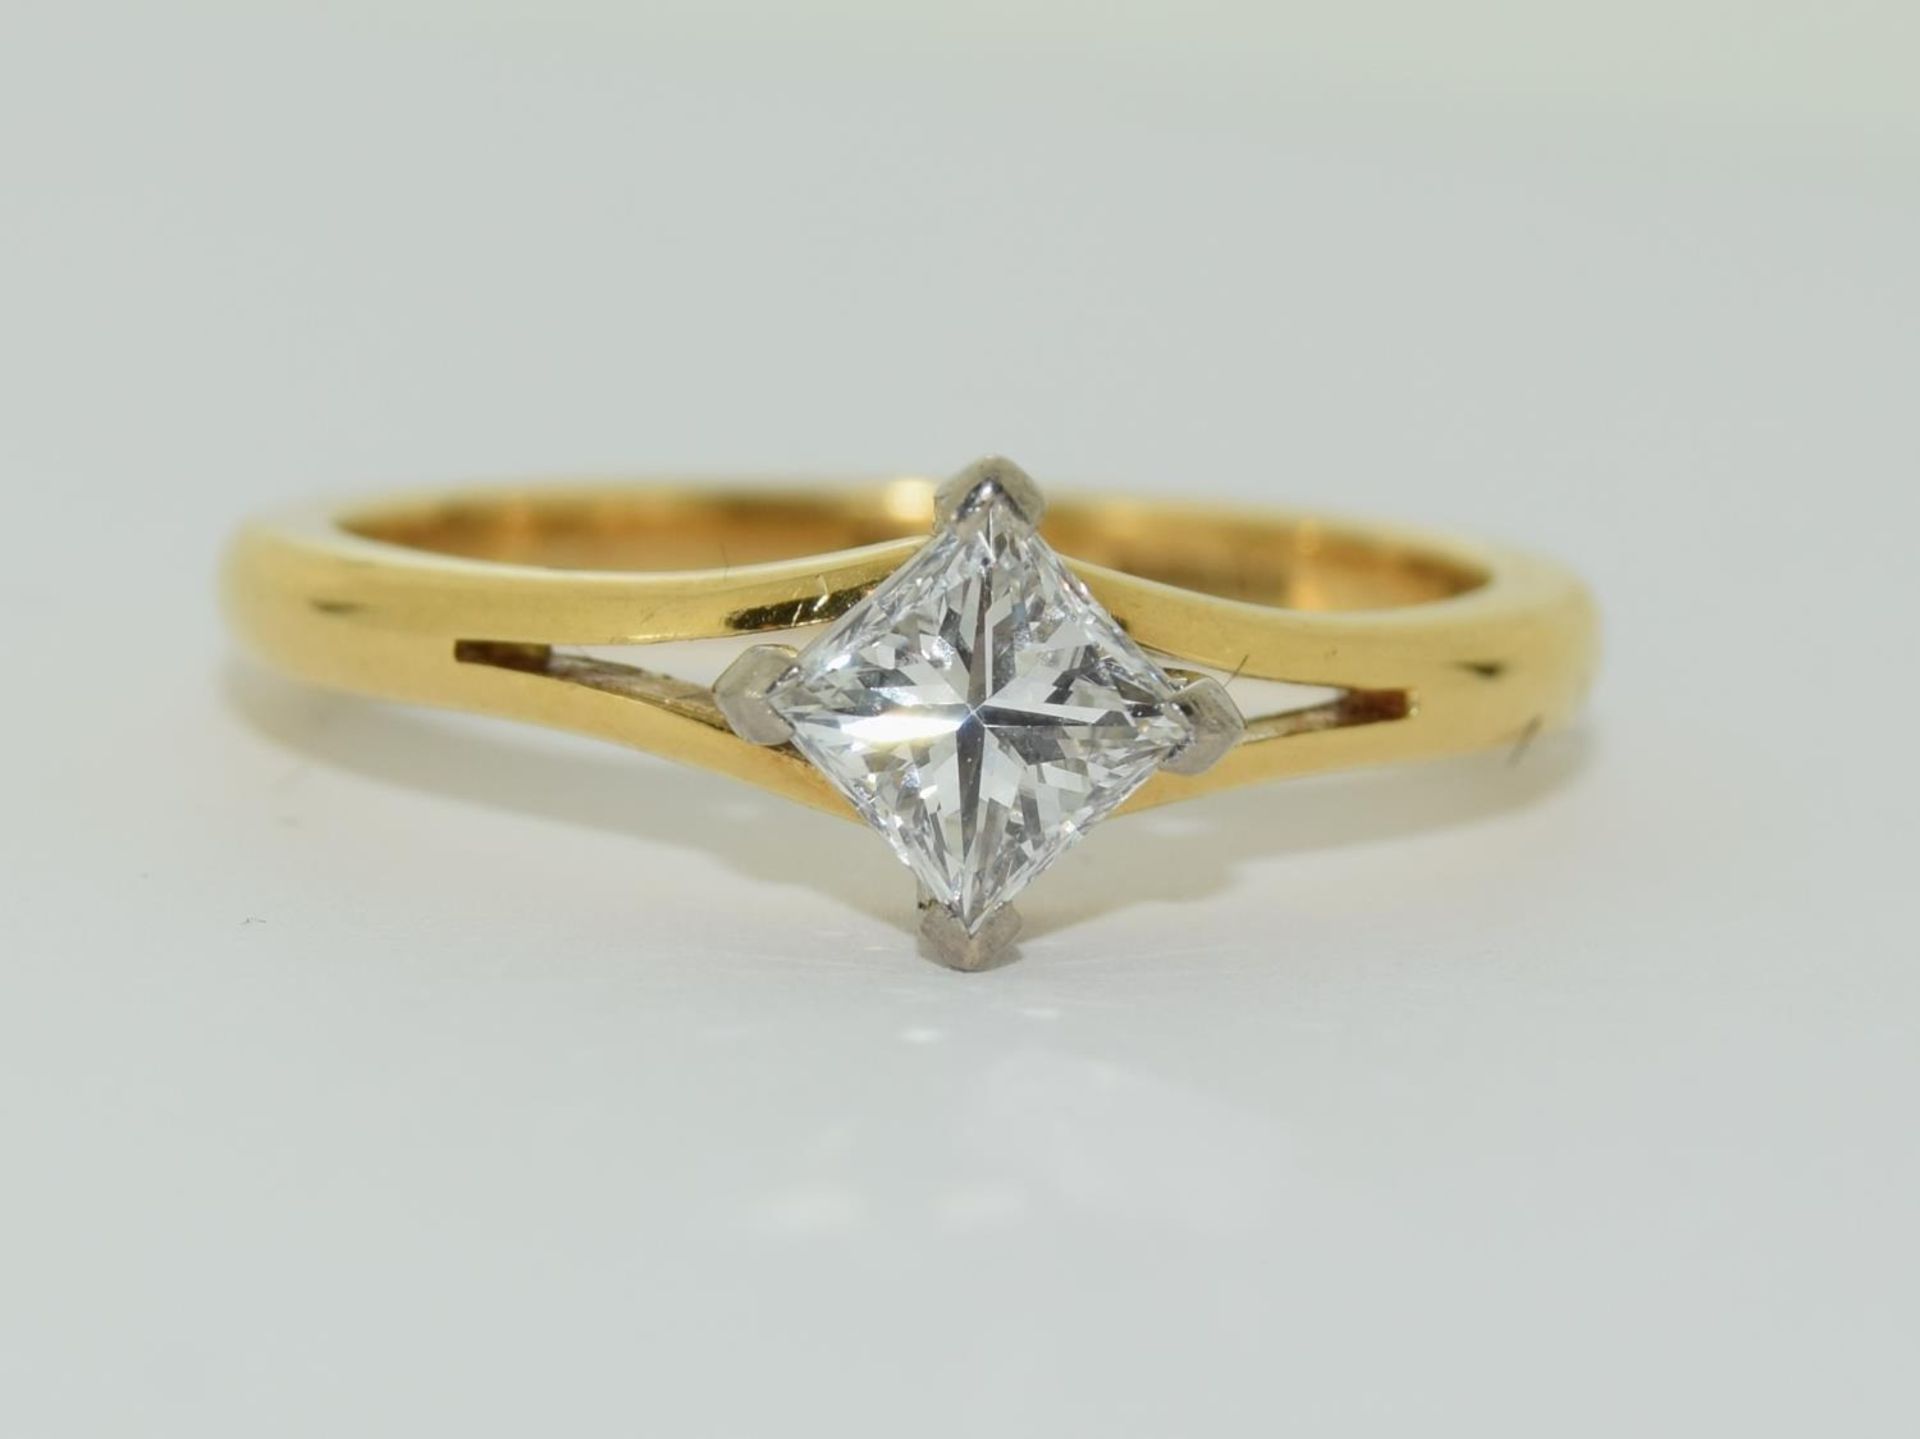 An 18ct yellow gold diamond (solitaire) approx weight - 3.1gm, diamond cut-princess diamond - Image 6 of 6